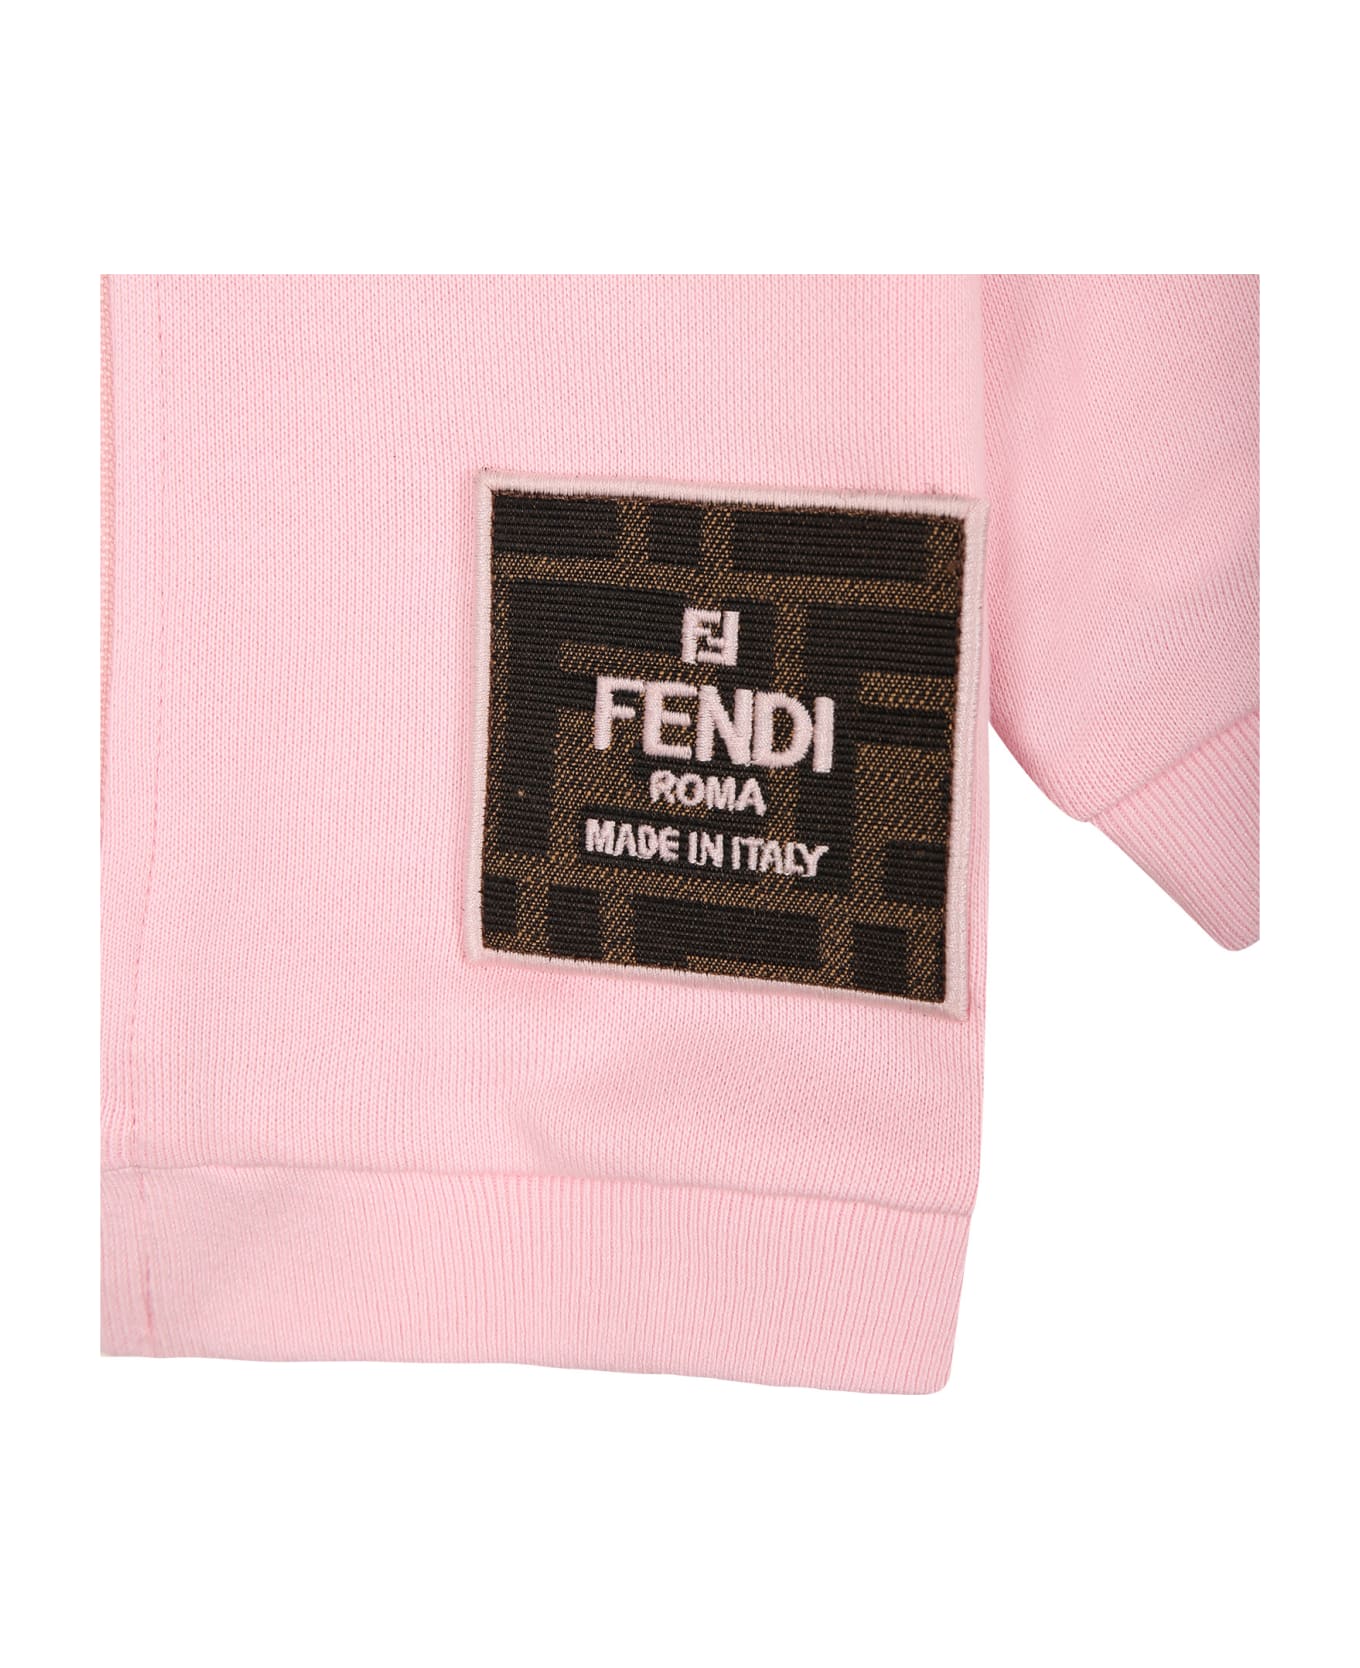 Fendi Pink Sweatshirt For Baby Girl With Logo - Pink ニットウェア＆スウェットシャツ